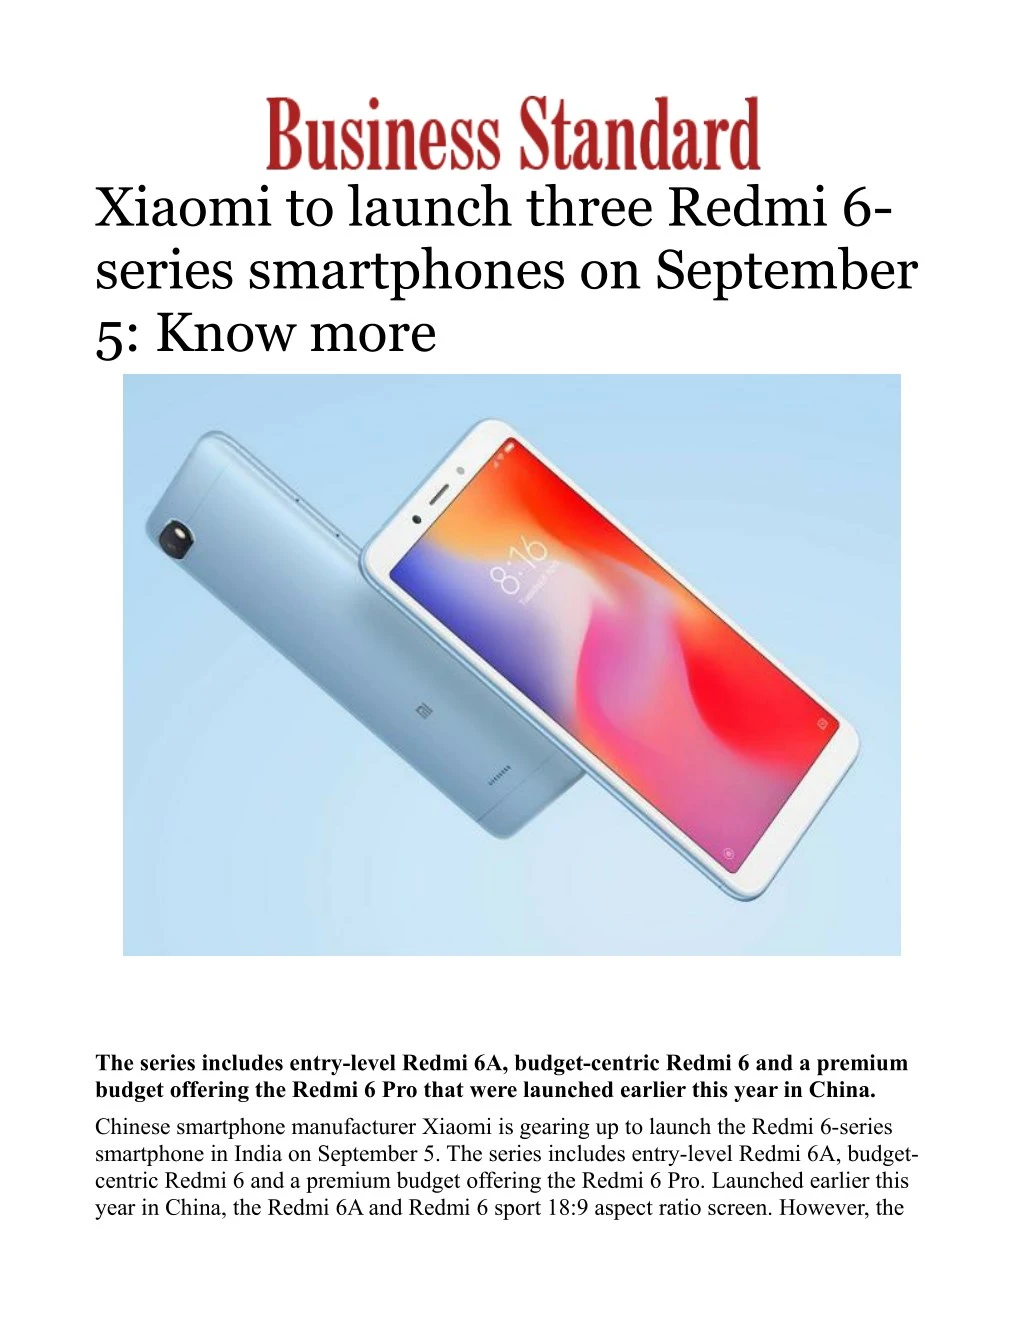 xiaomi to launch three redmi 6 series smartphones